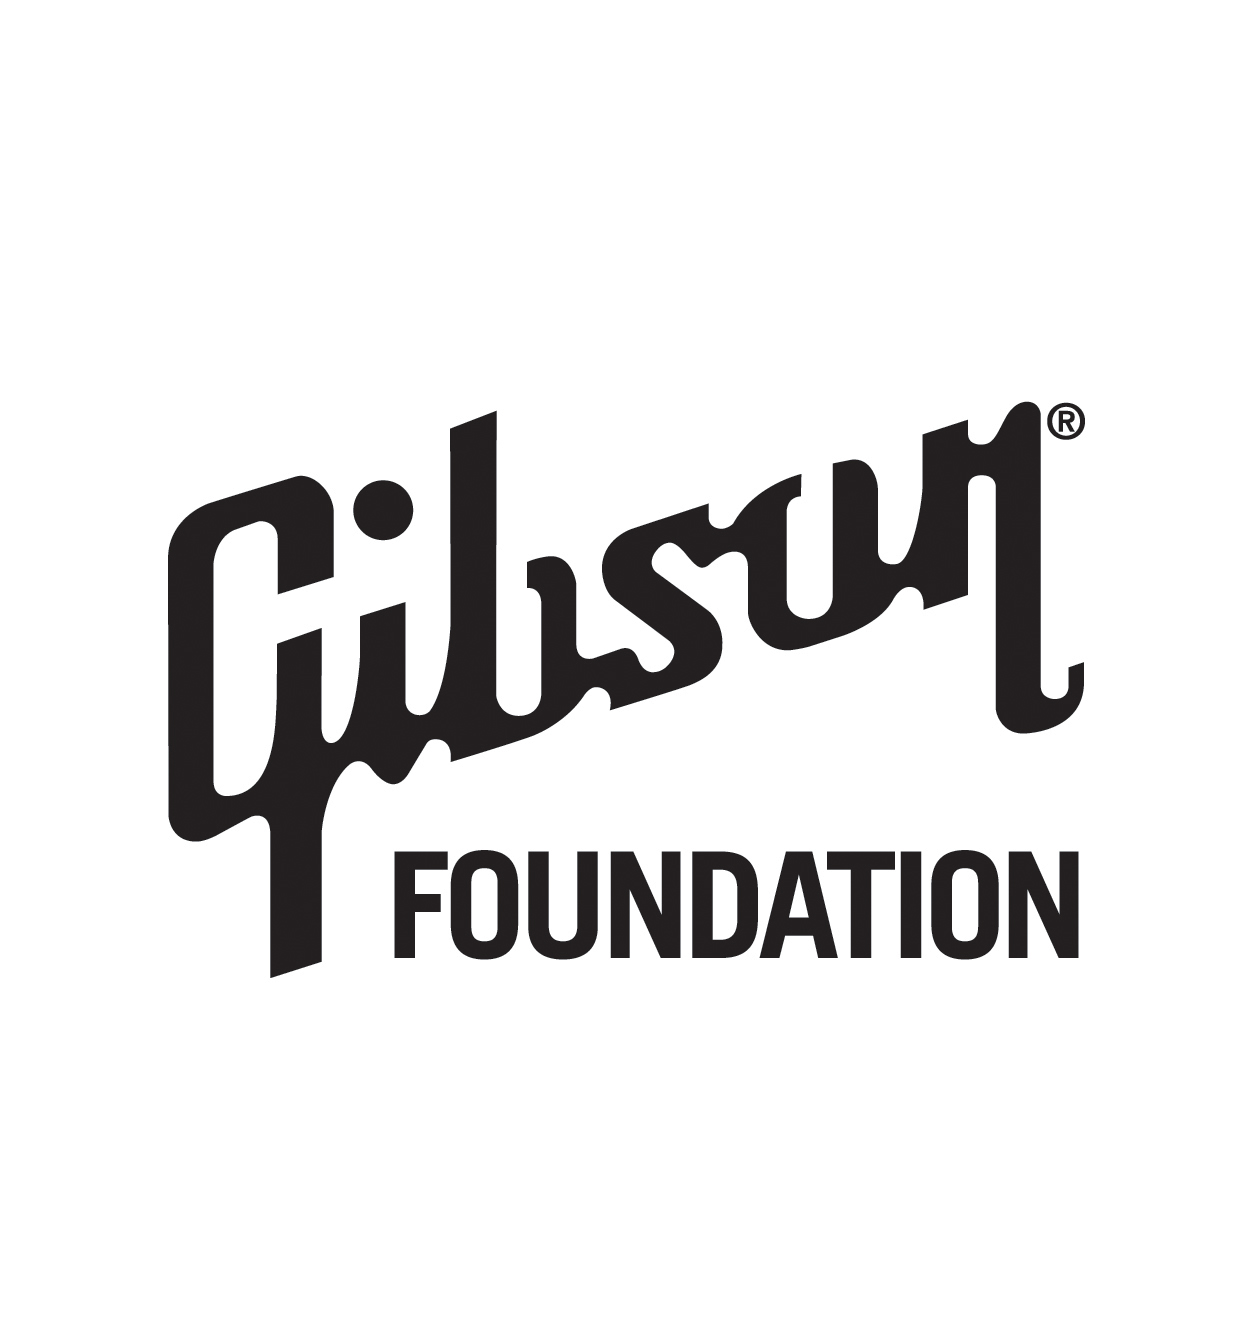 http://www.gibson.com/Gibson/Gibson-Foundation/Home.aspx